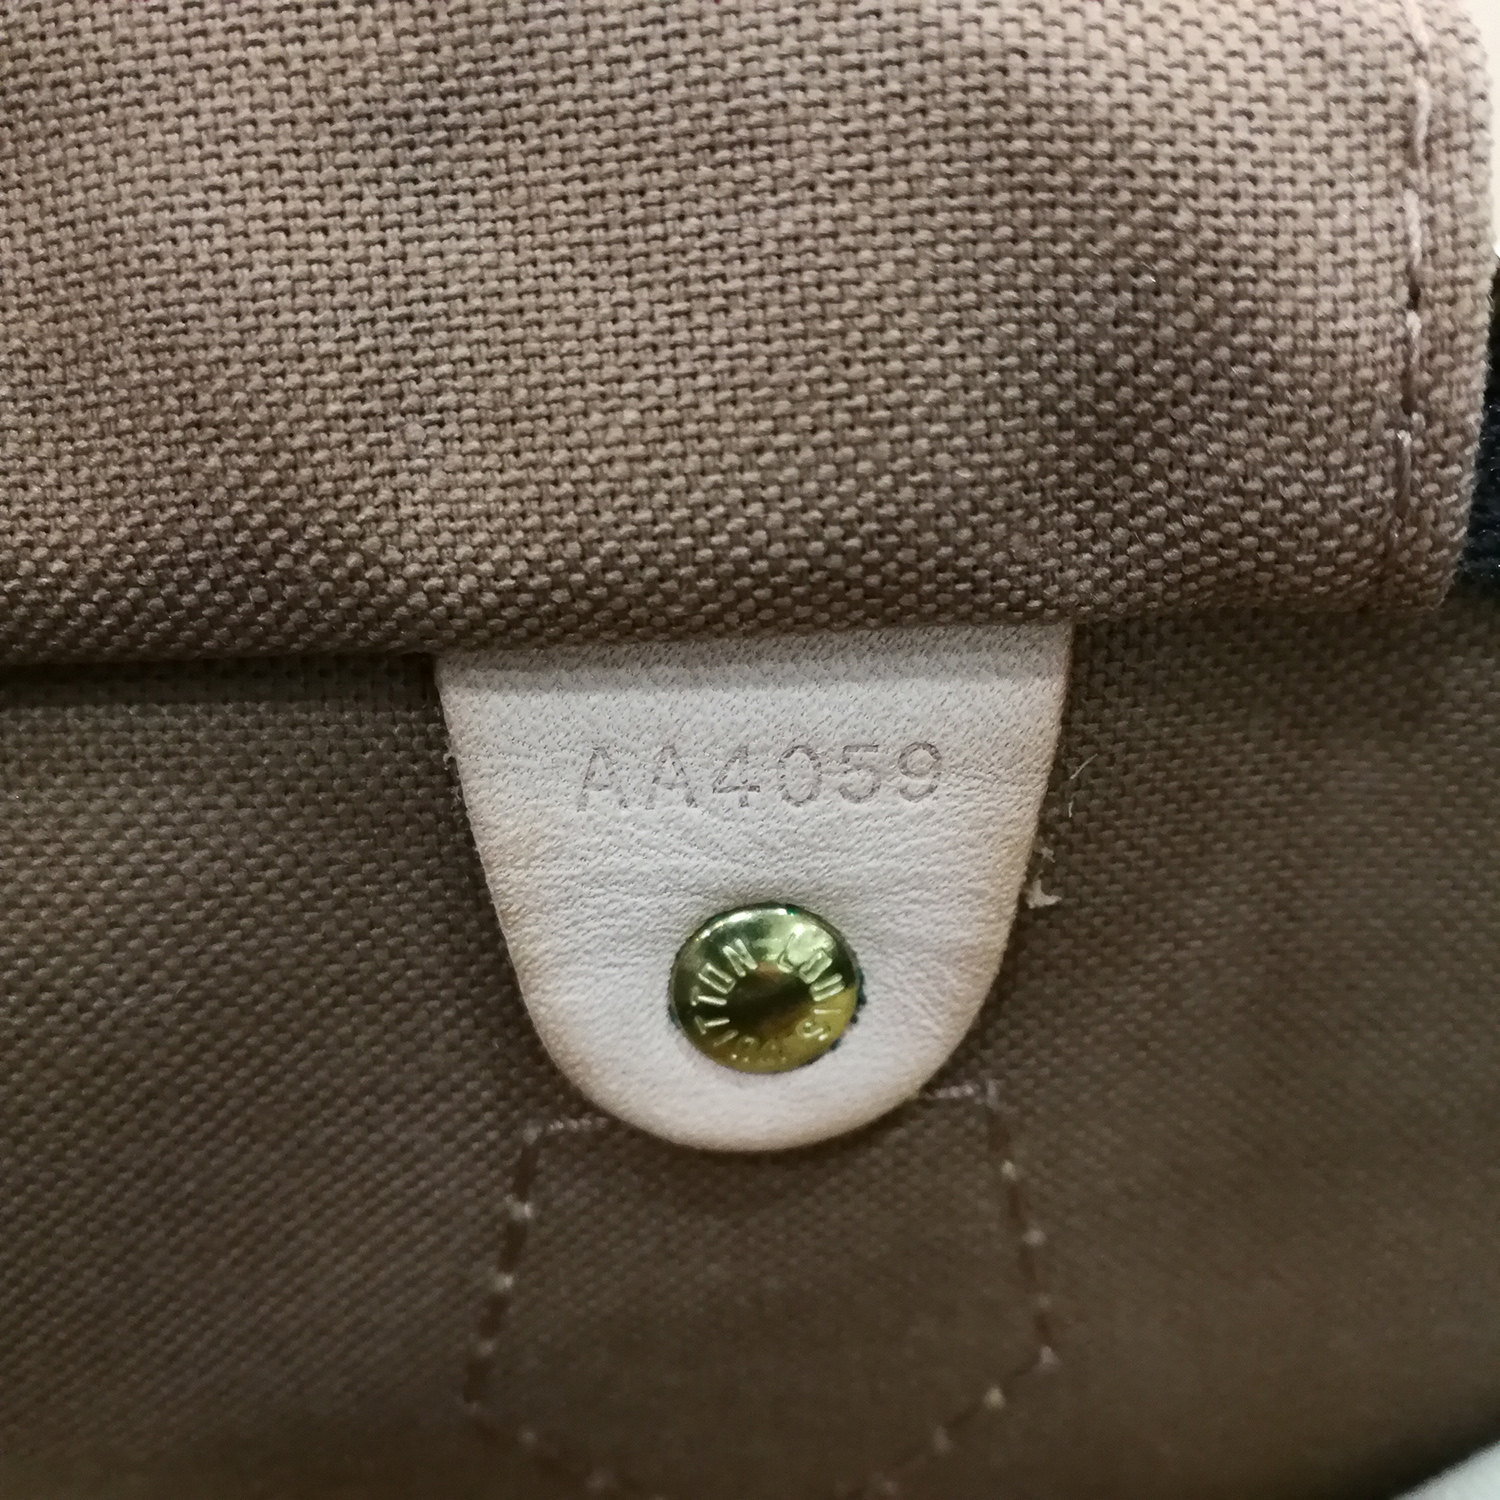 Used - Louis Vuitton Speedy Size 35 Monogram Canvas Handbag - 9brandname